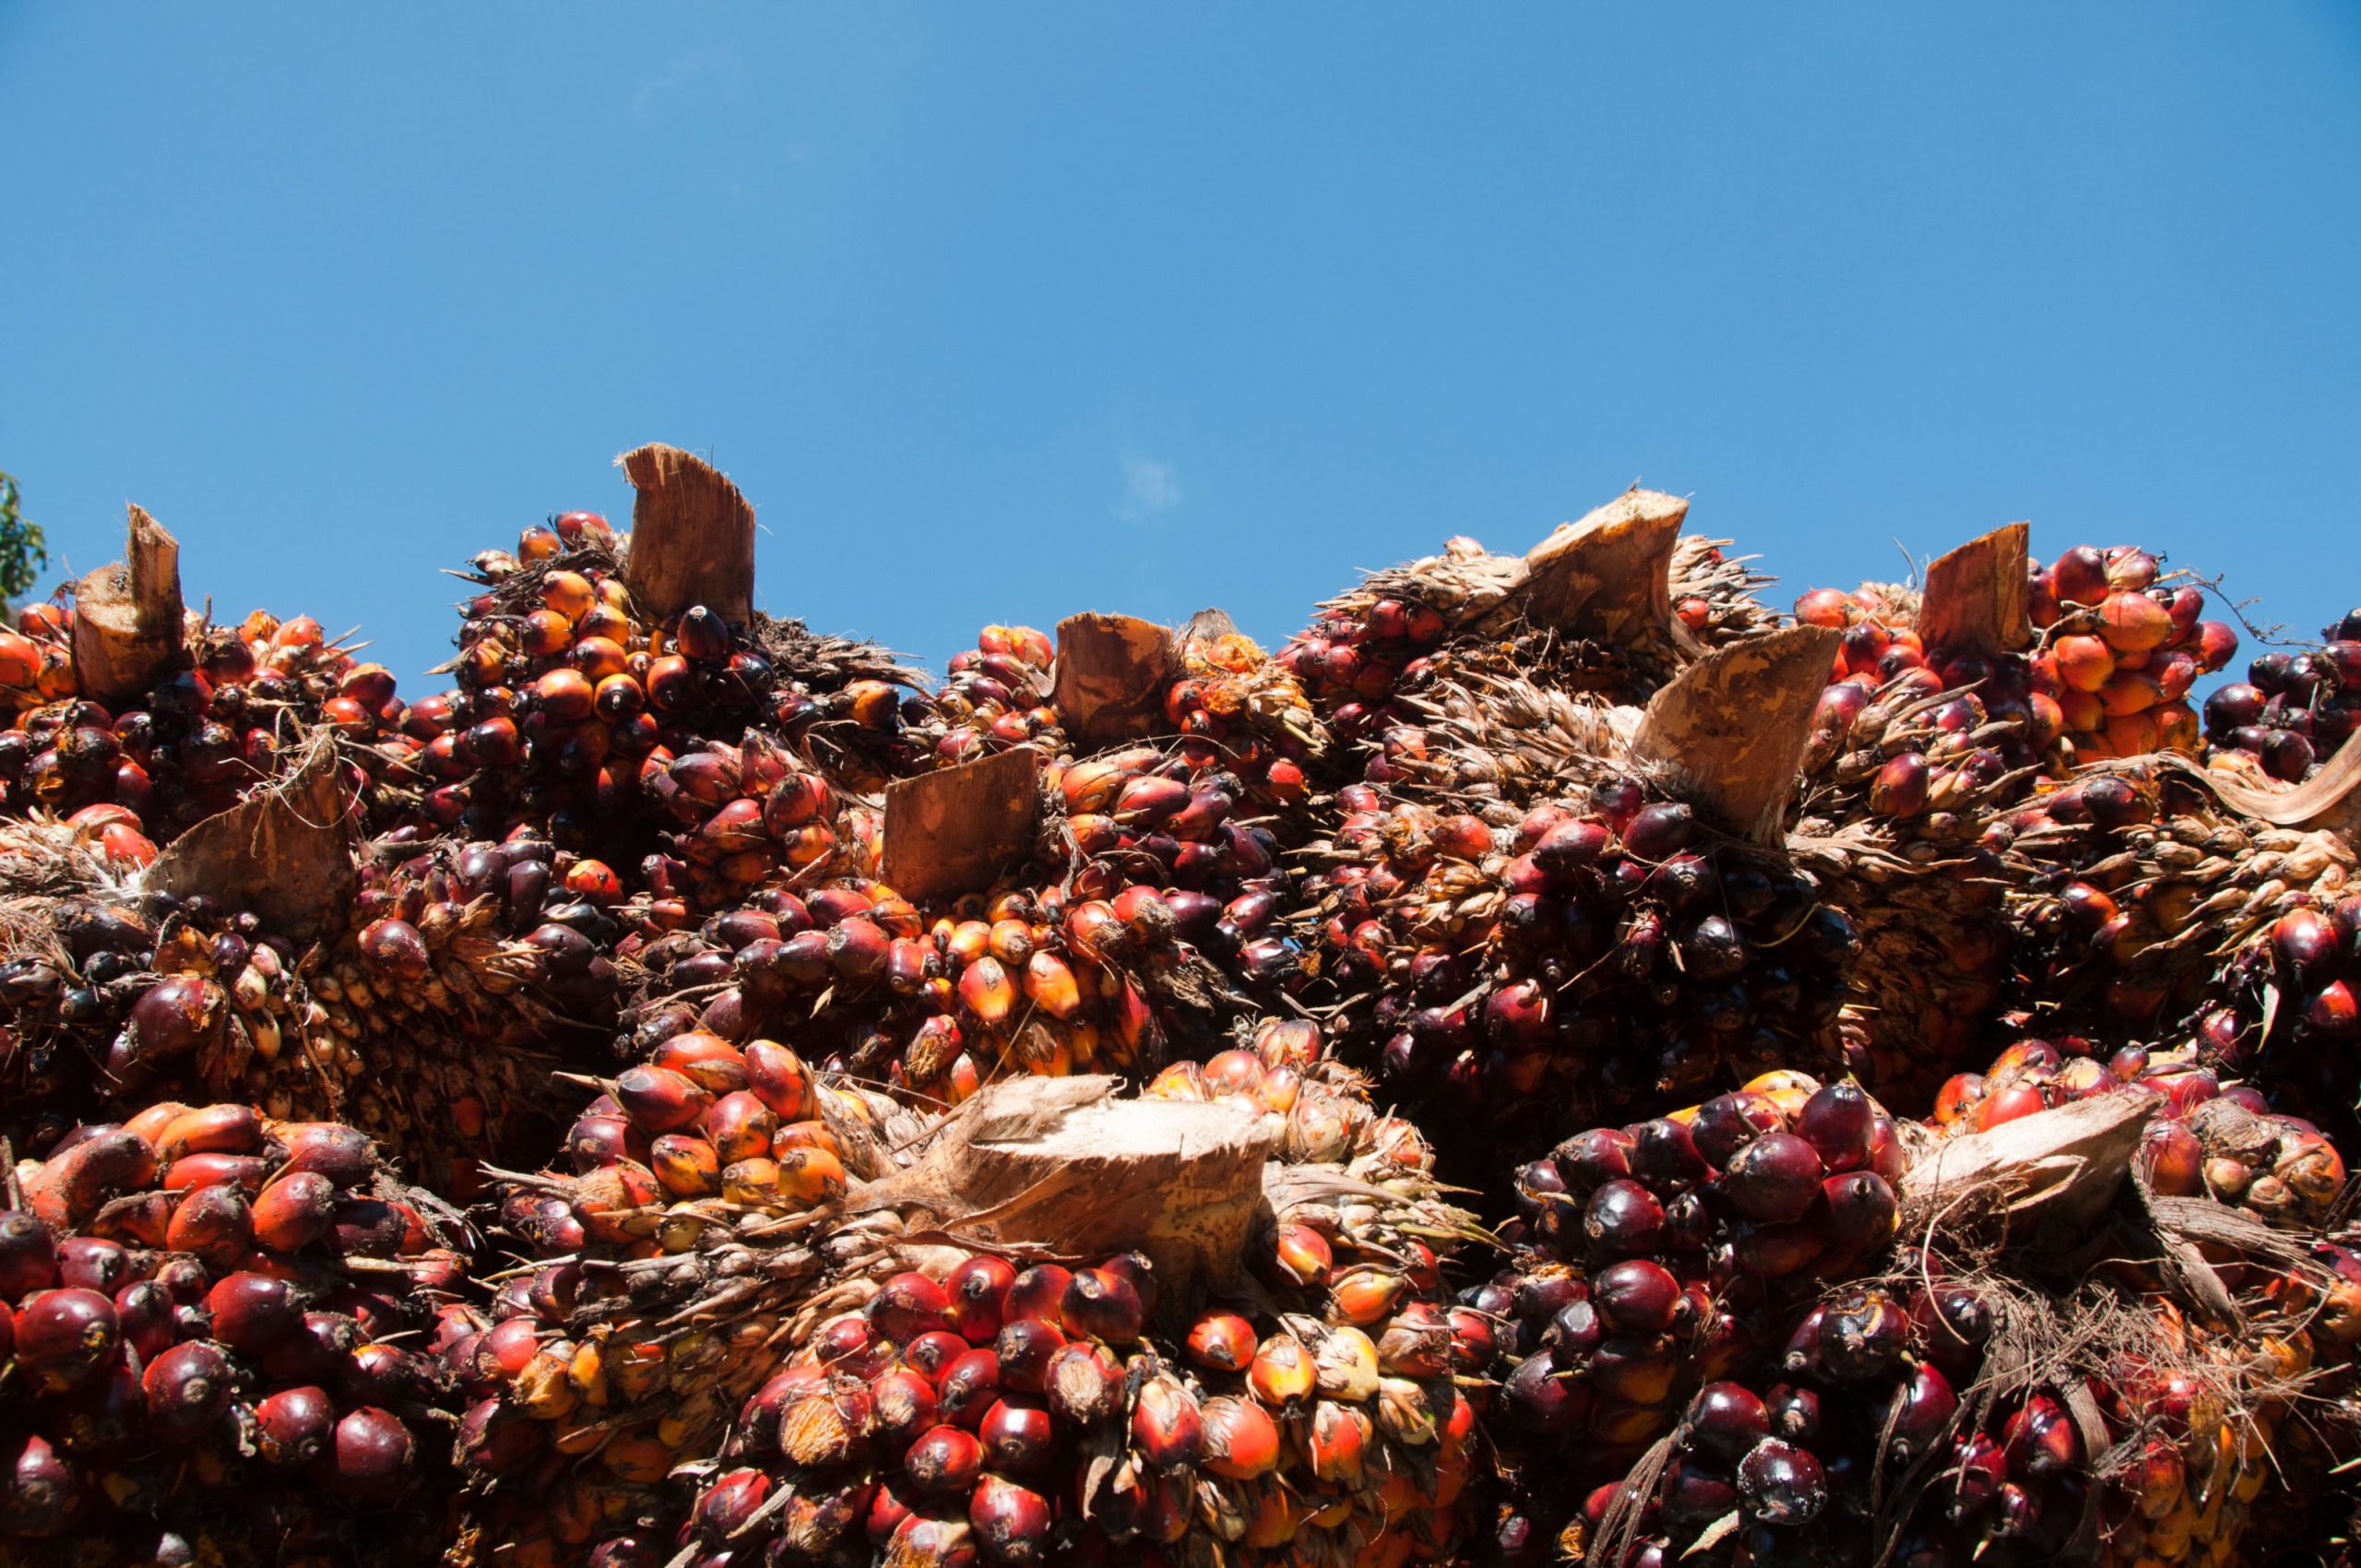 Oil palm fruit Kerala, India. Indiascapes/Alamy